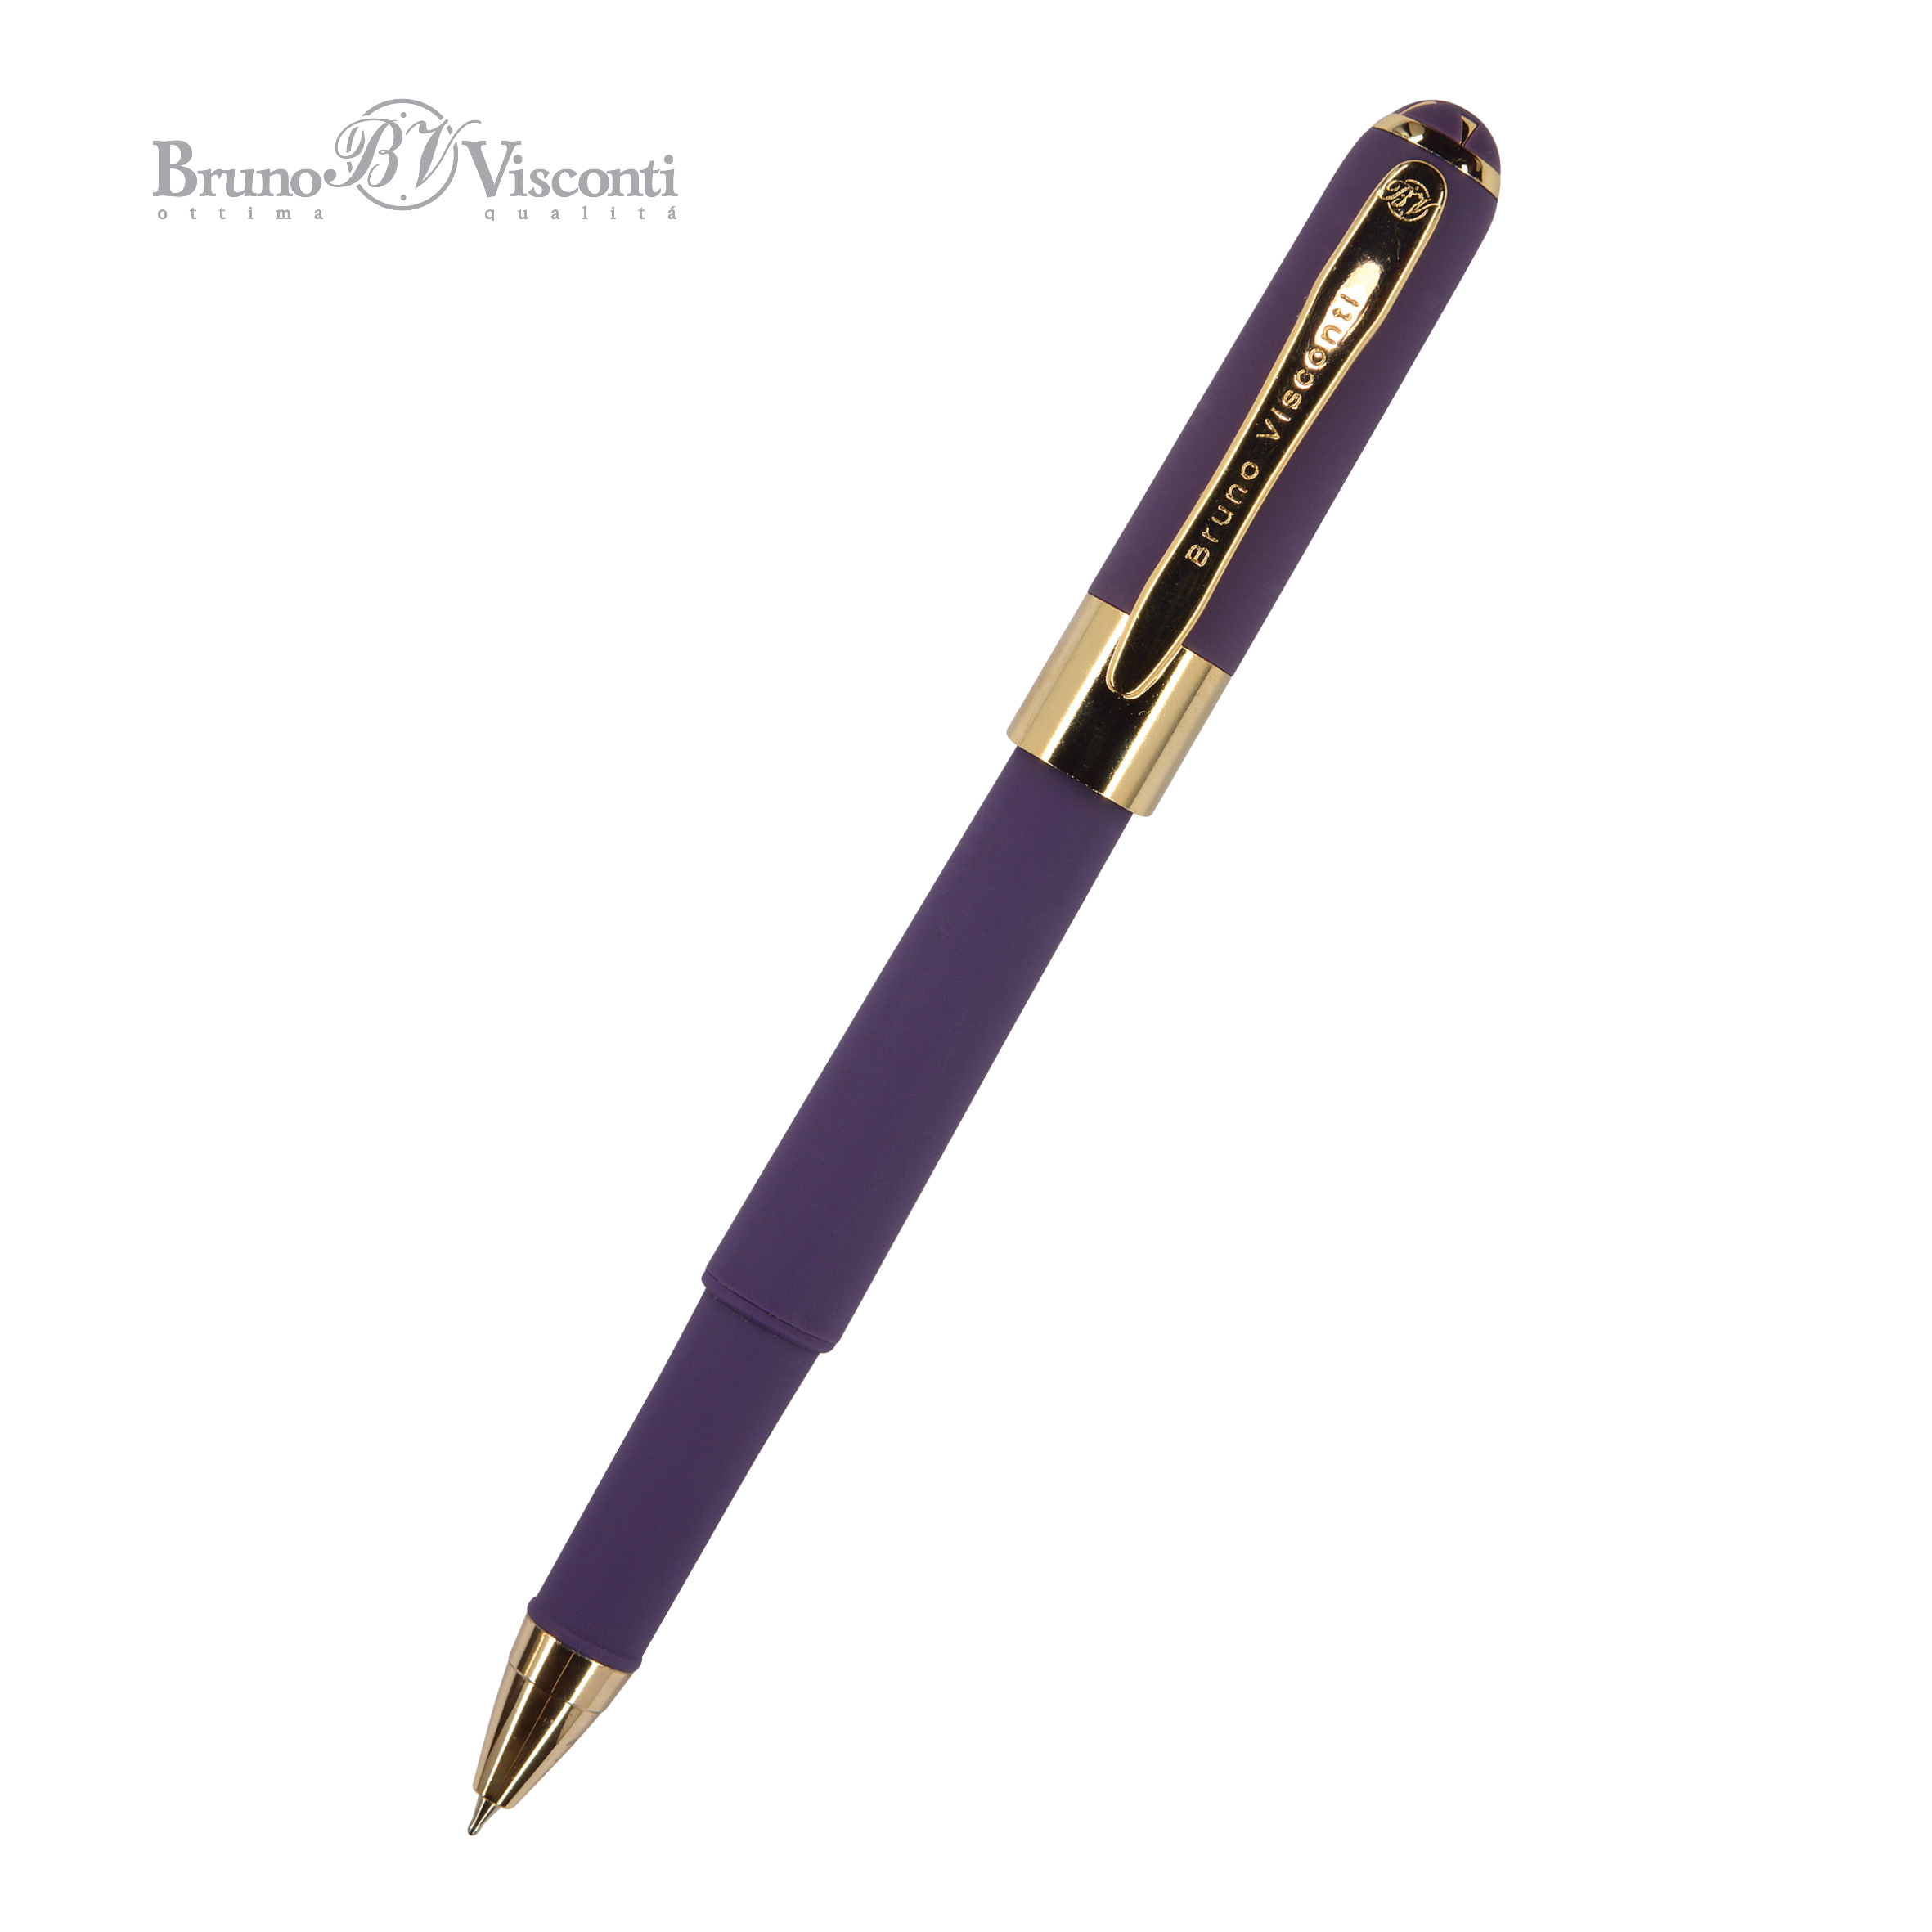 Ручка подар шар BV Monaco синяя 0,5мм виноградный корпус